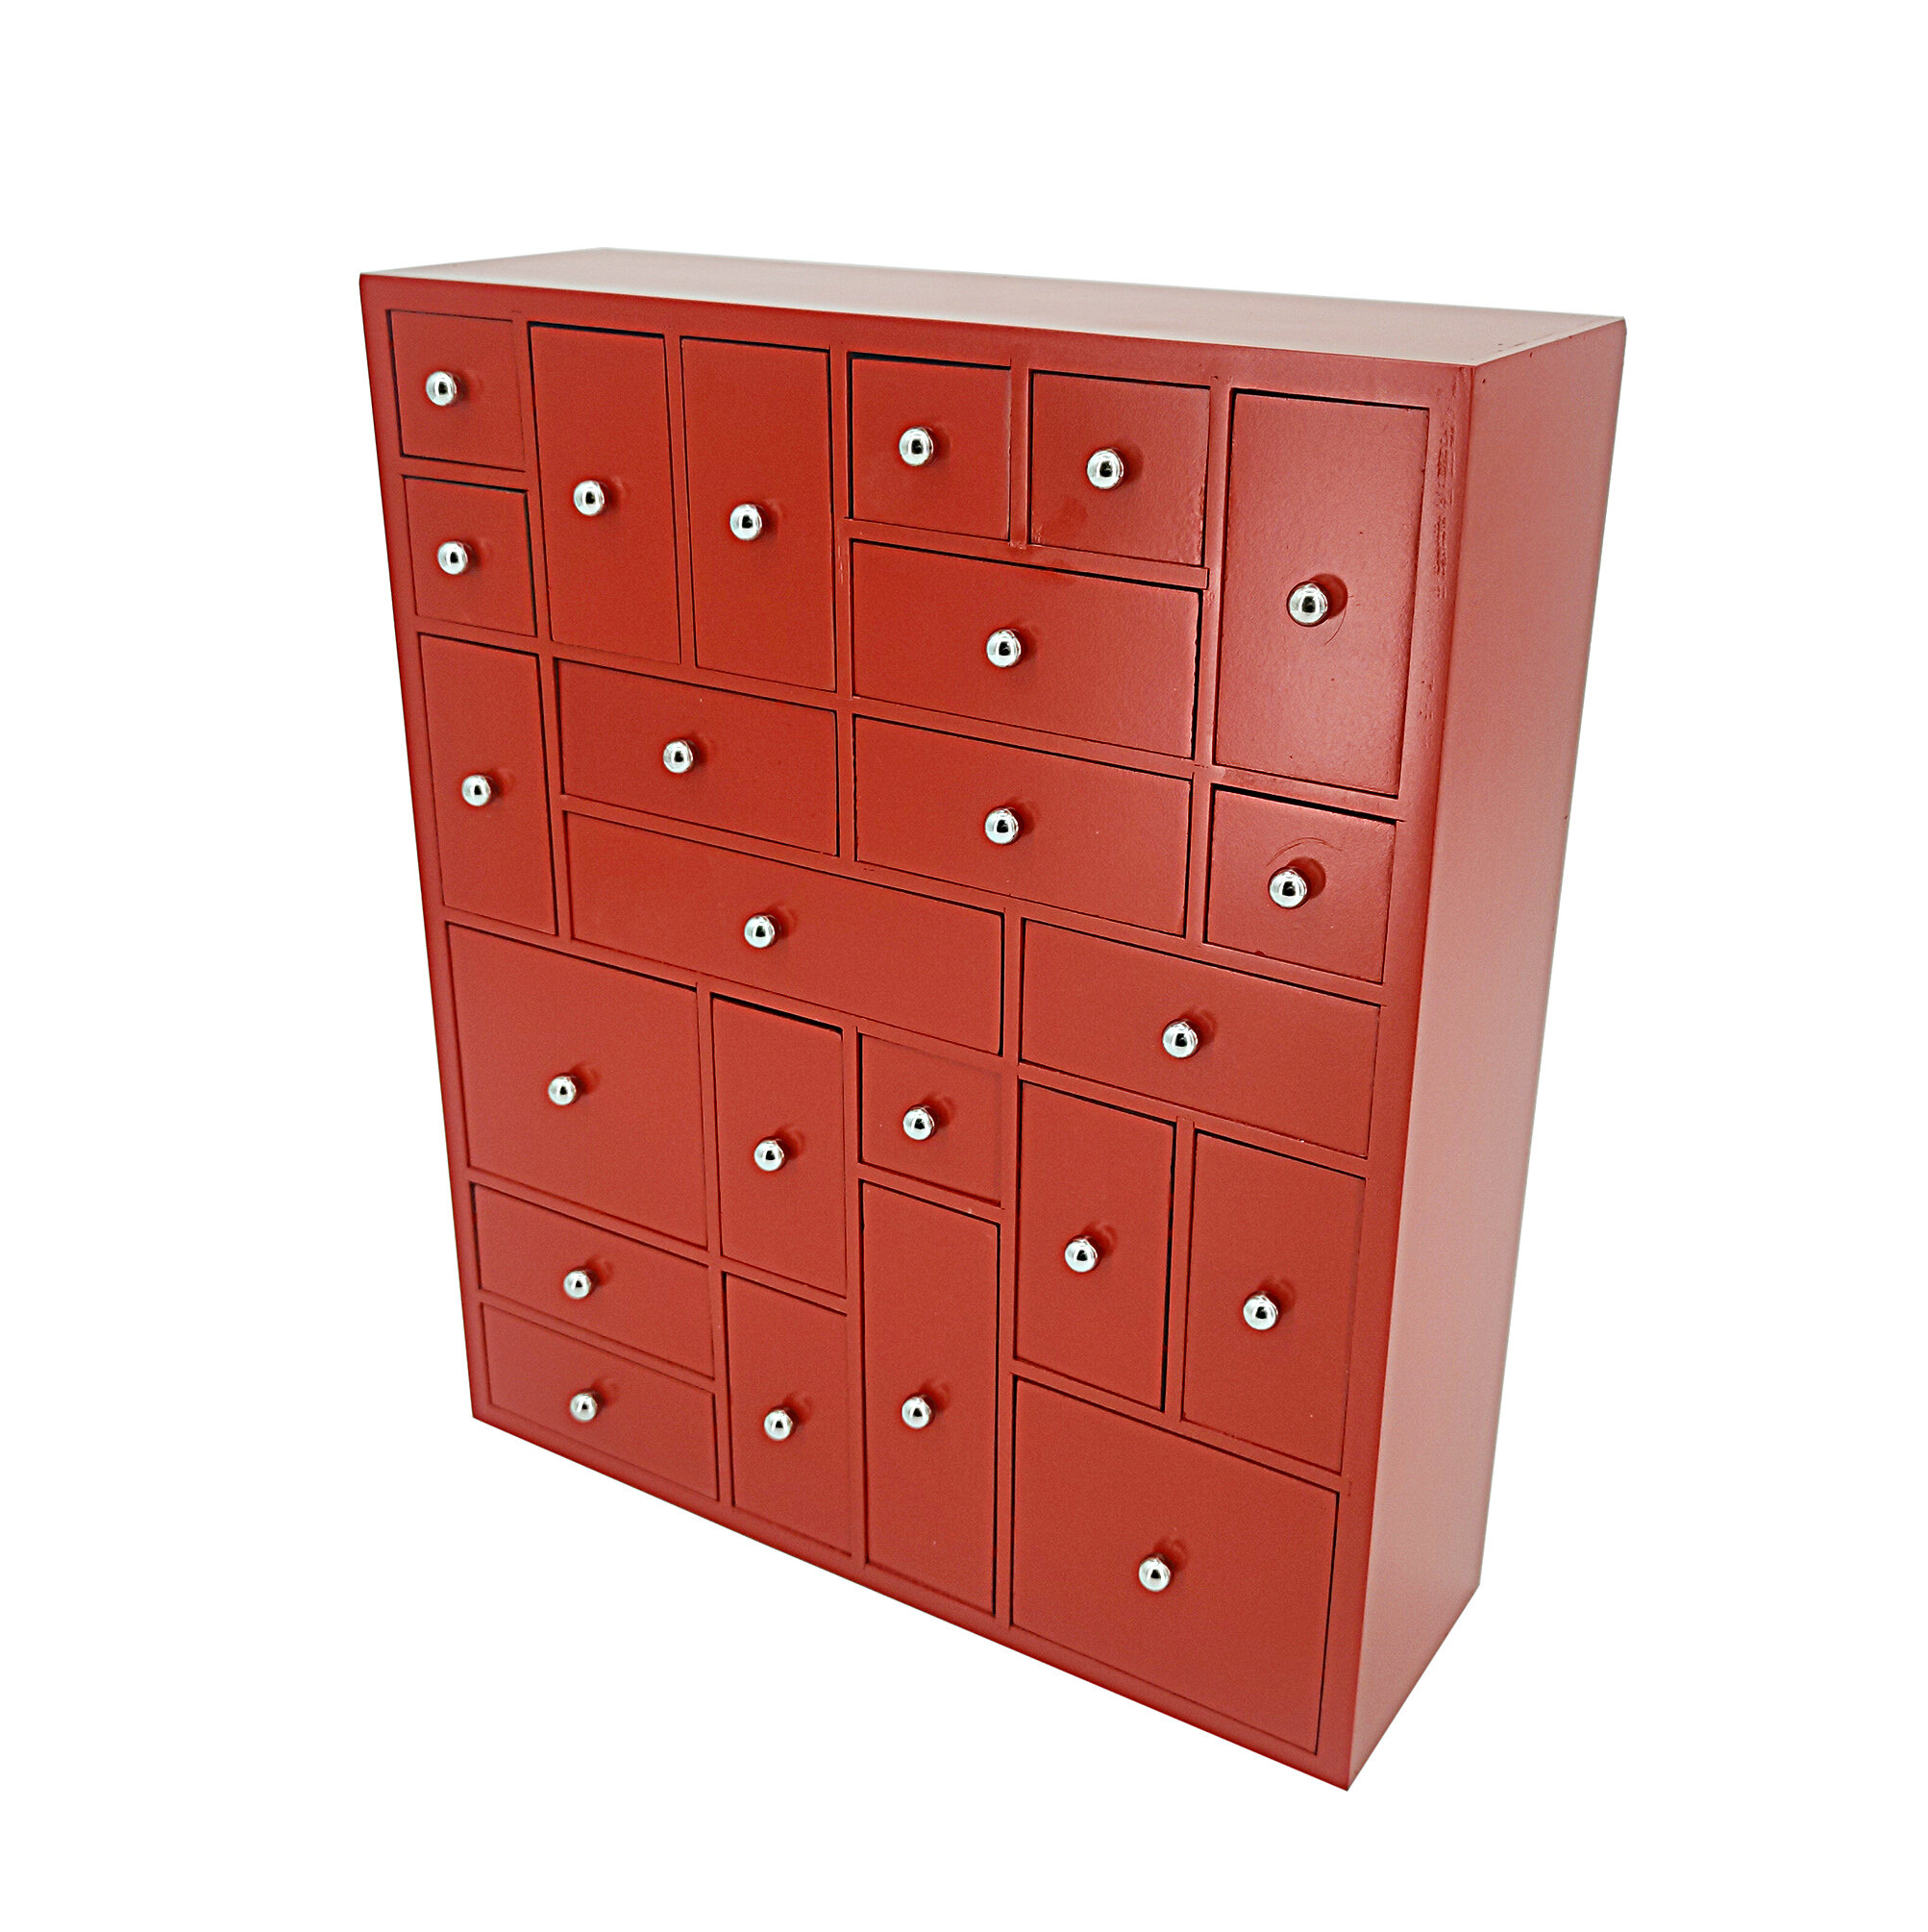 Desk Organizer Large Shelf Multi Compartments Units Wood Desktop Storage  Board Organizer White